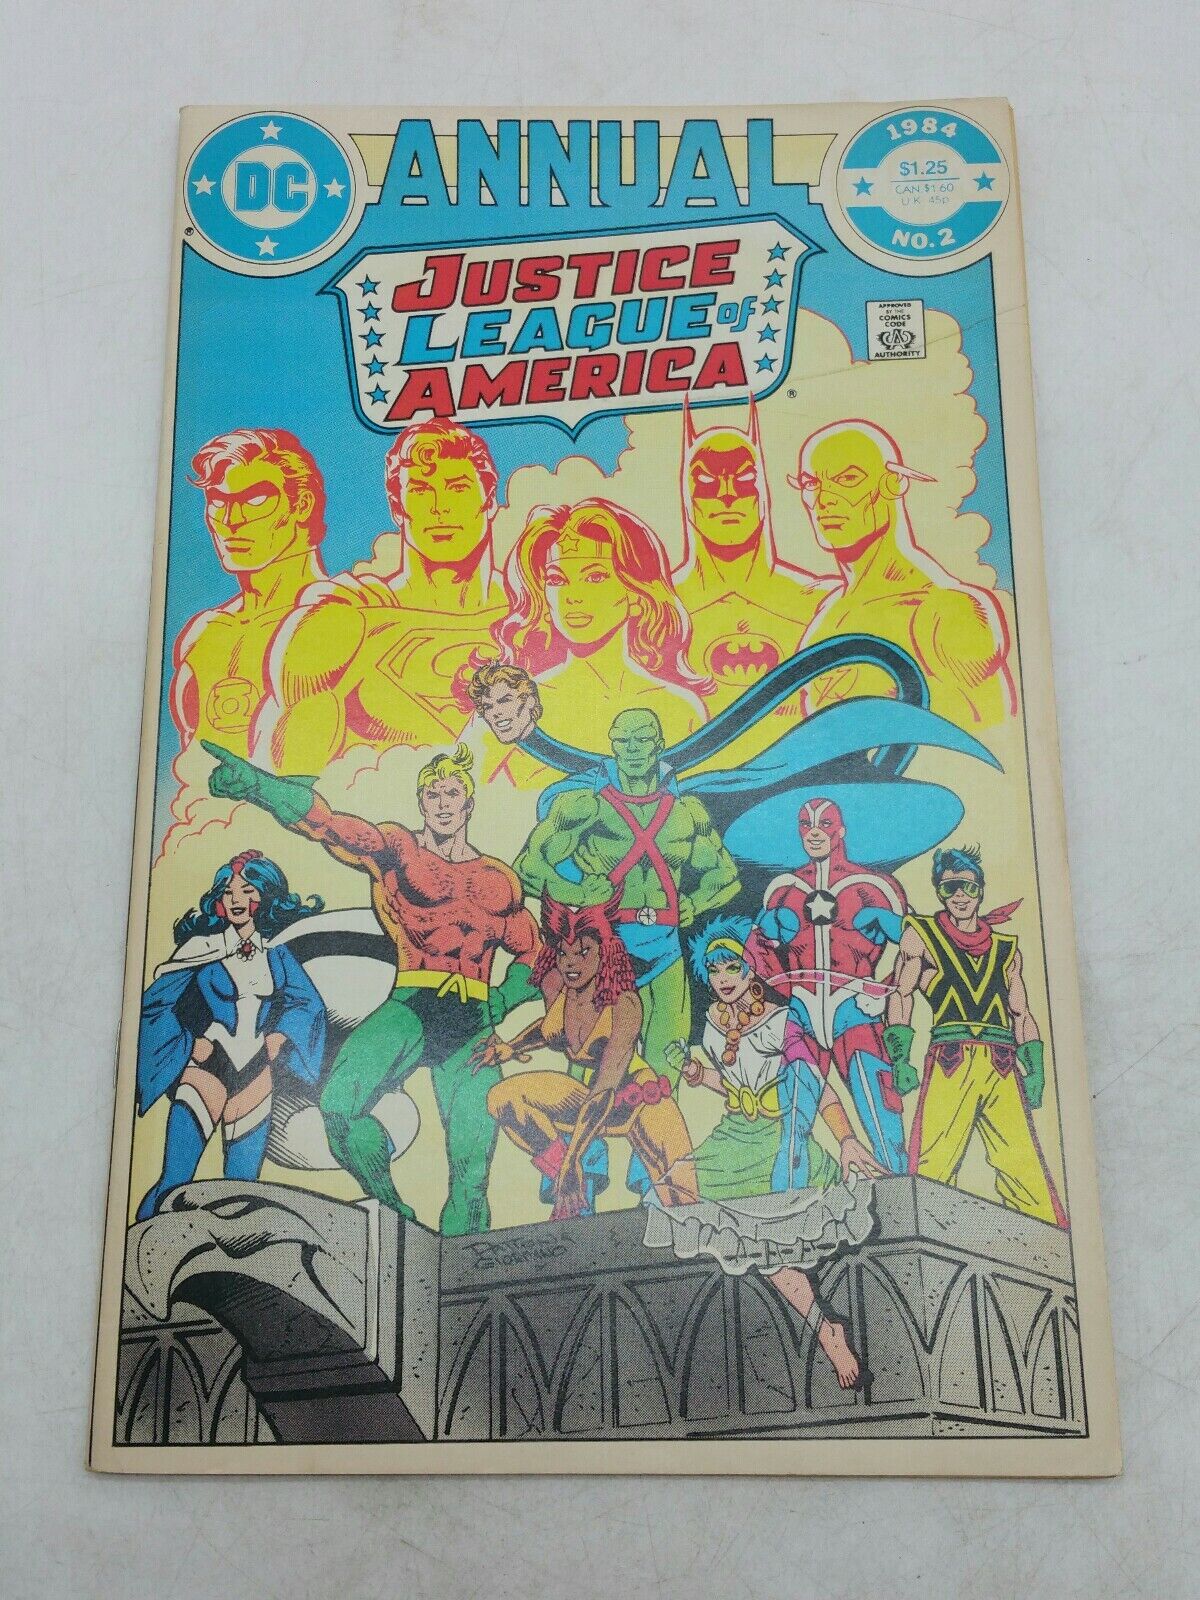 DC Justice League of America Annual #2, 1984 Bk083